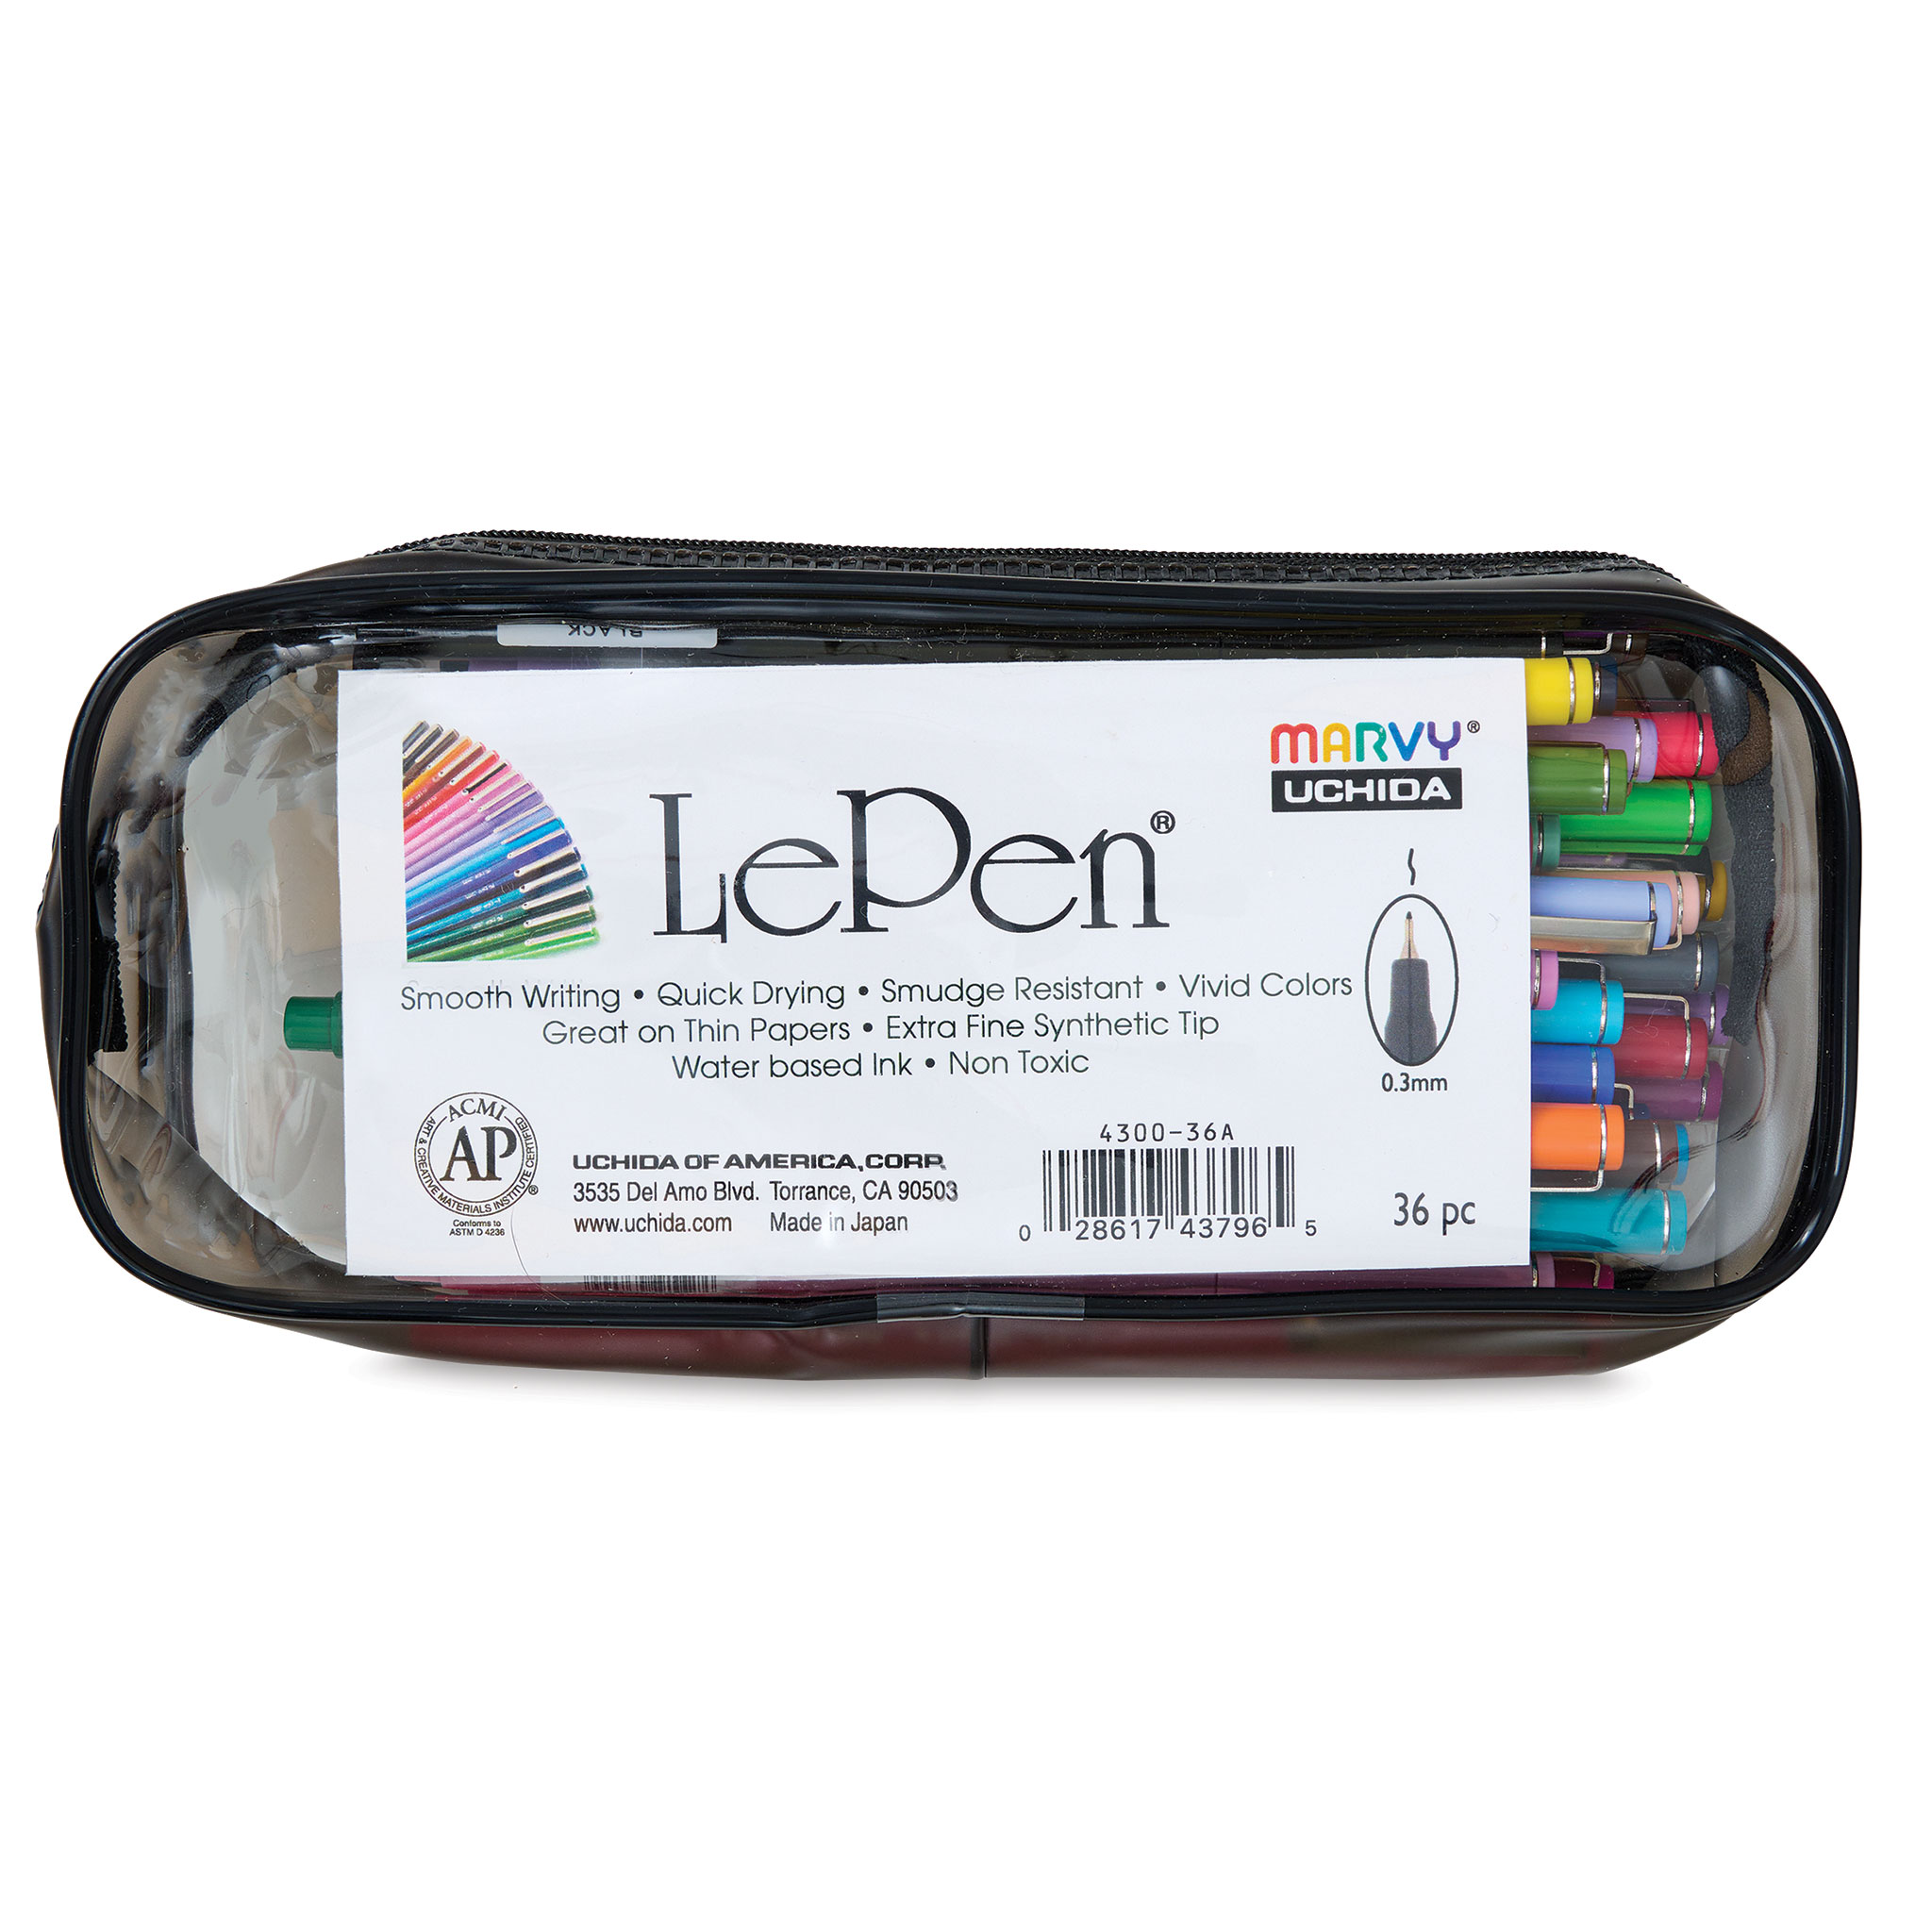 LePen - The Art Store/Commercial Art Supply